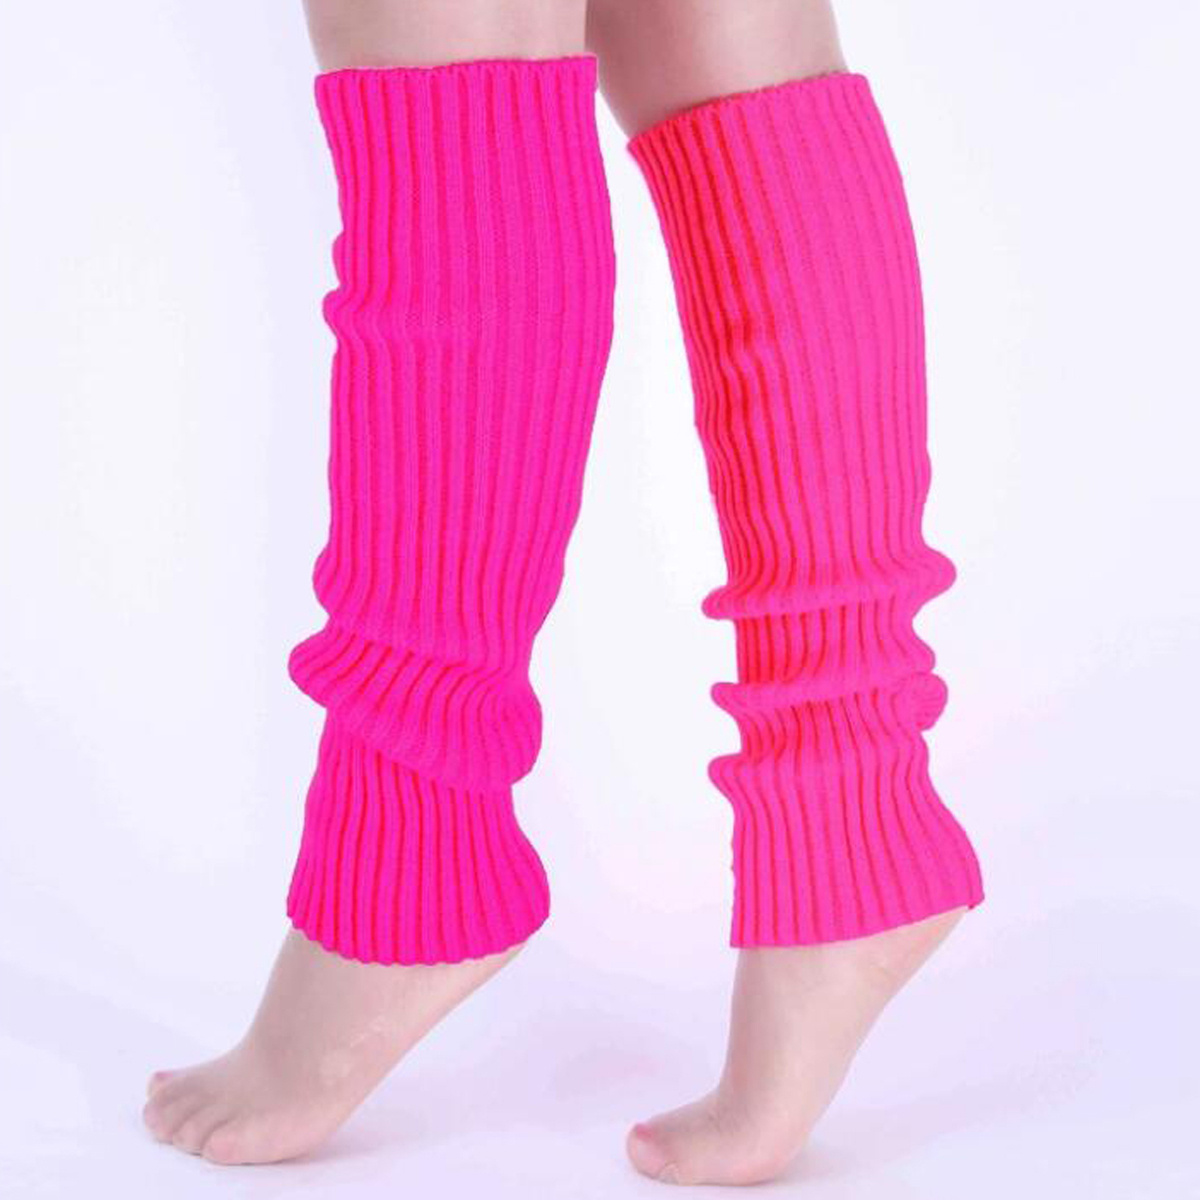 

Classic Knit Leg Warmers, Rib-knit Knee-high Leg Warmer Socks, Women's Stockings & Hosiery